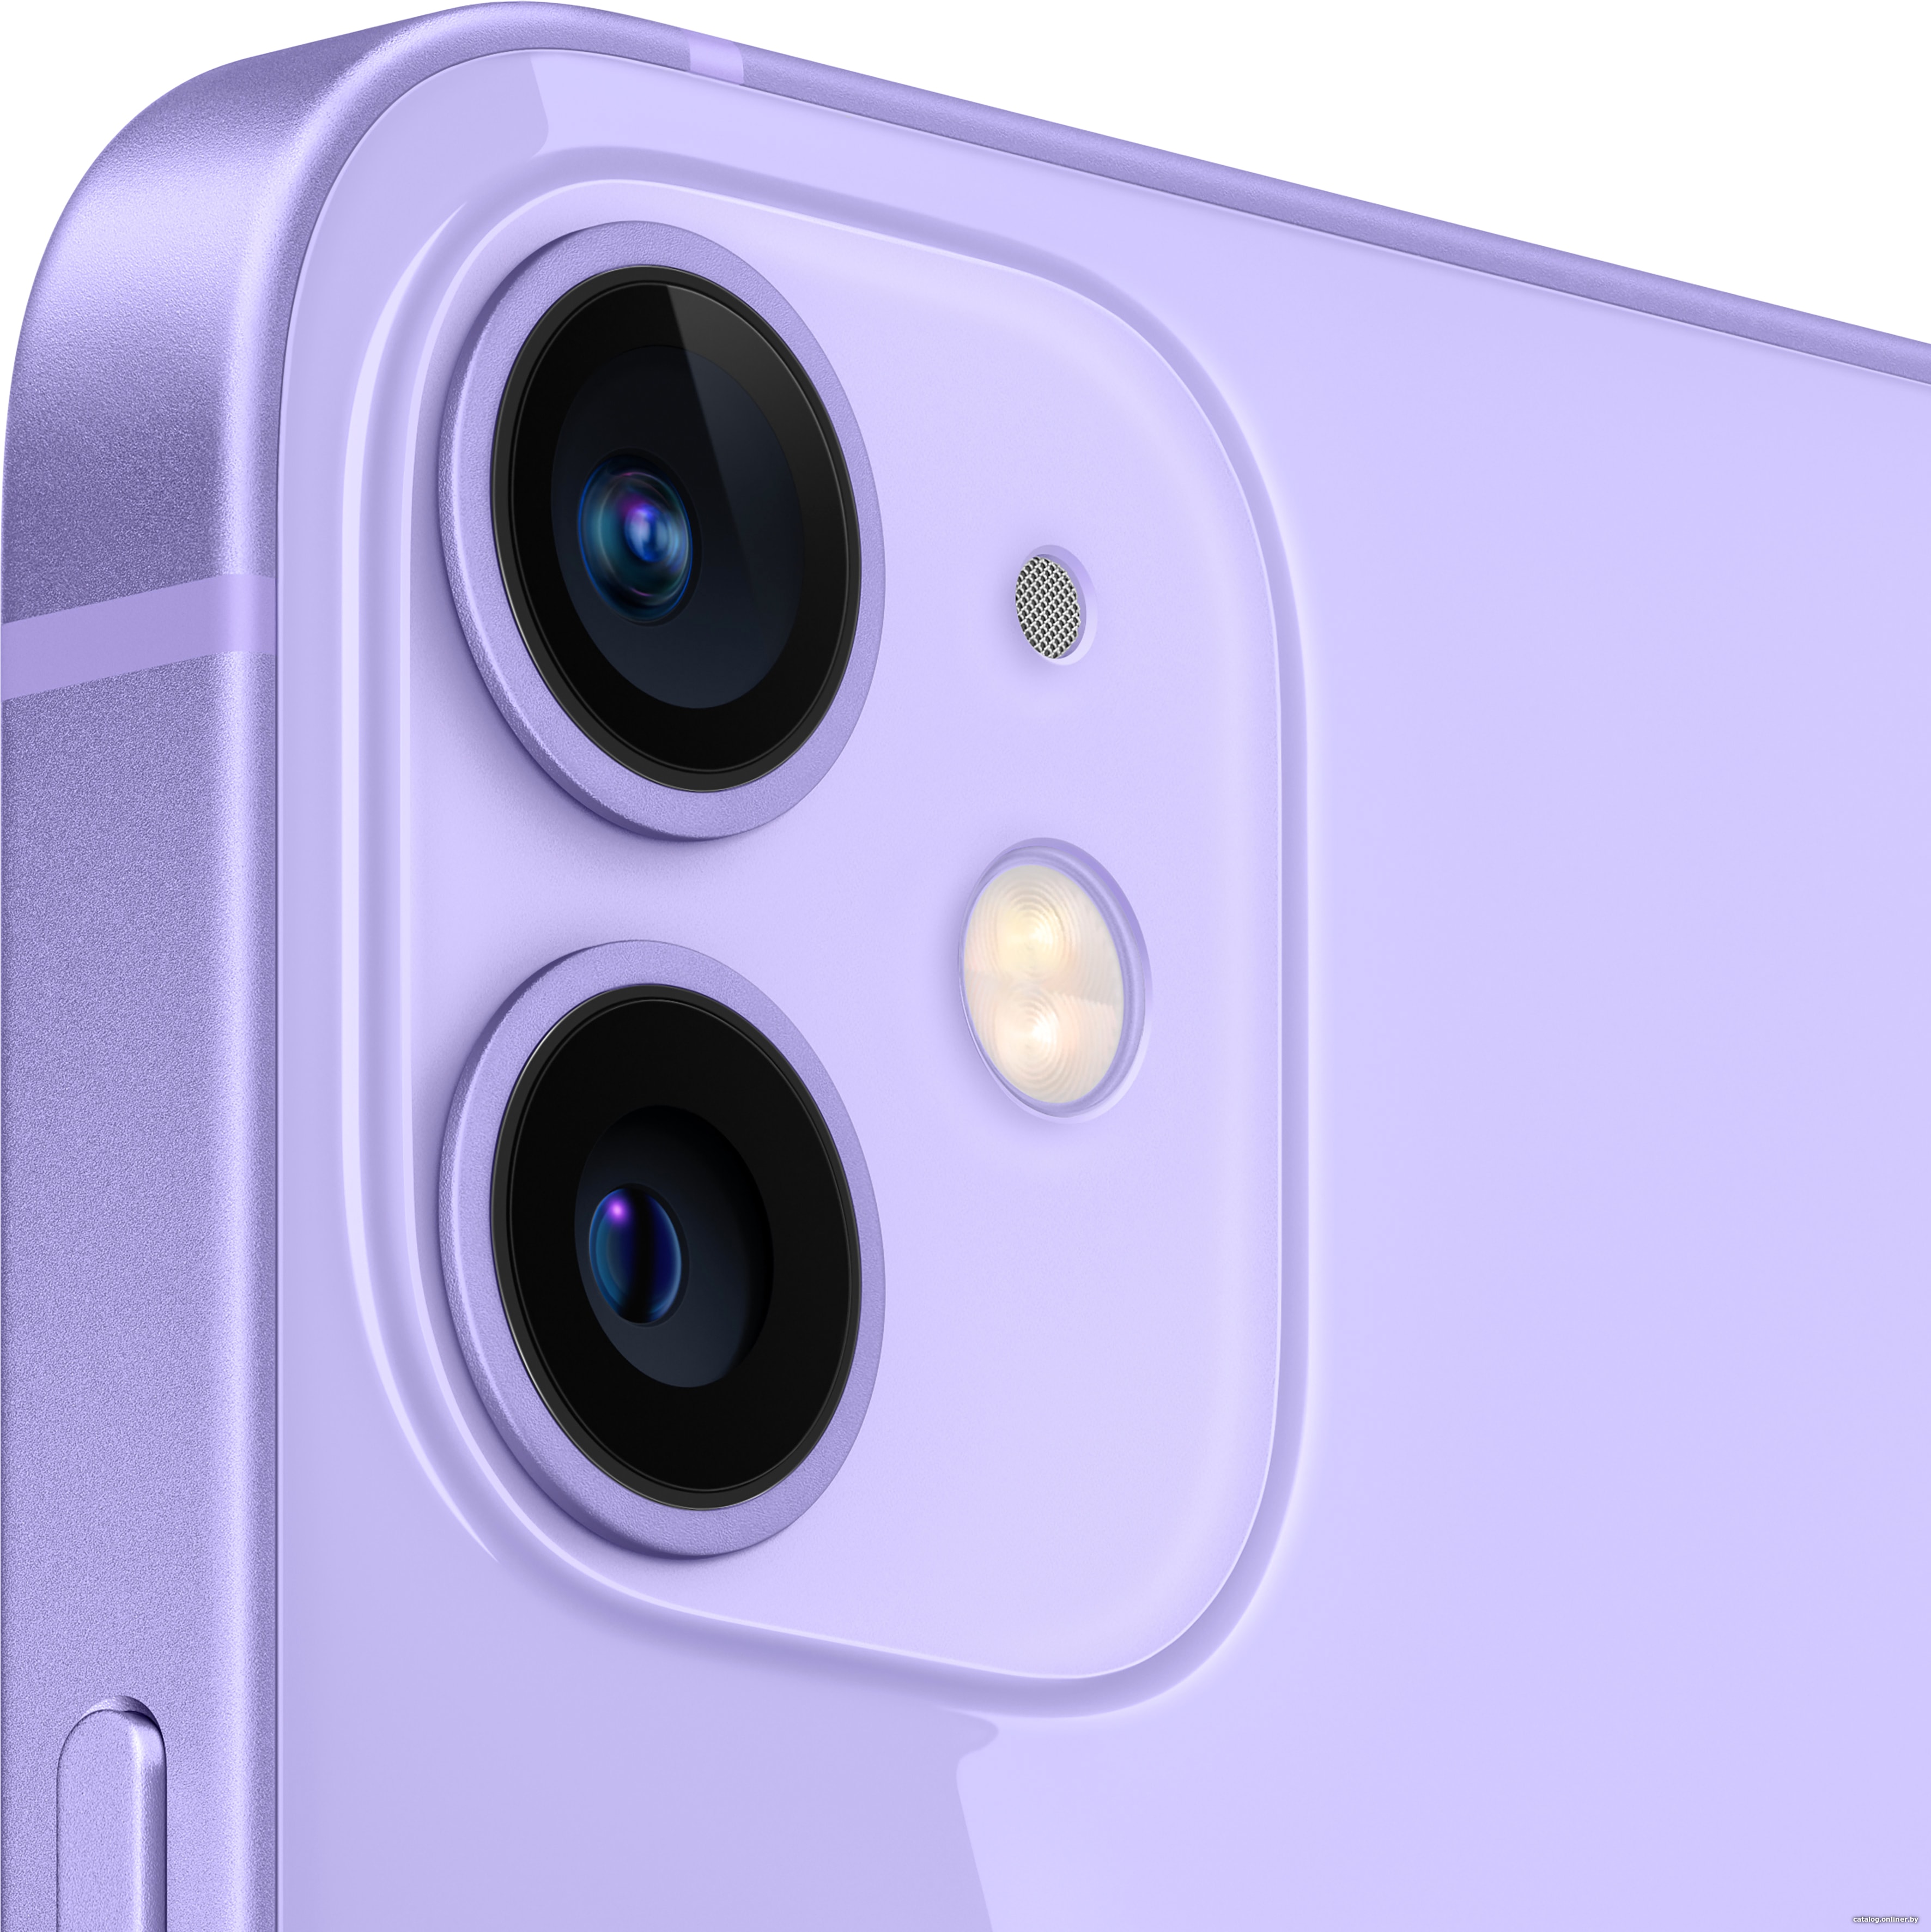 Apple iPhone 12 mini 64GB (фиолетовый) смартфон купить в Минске